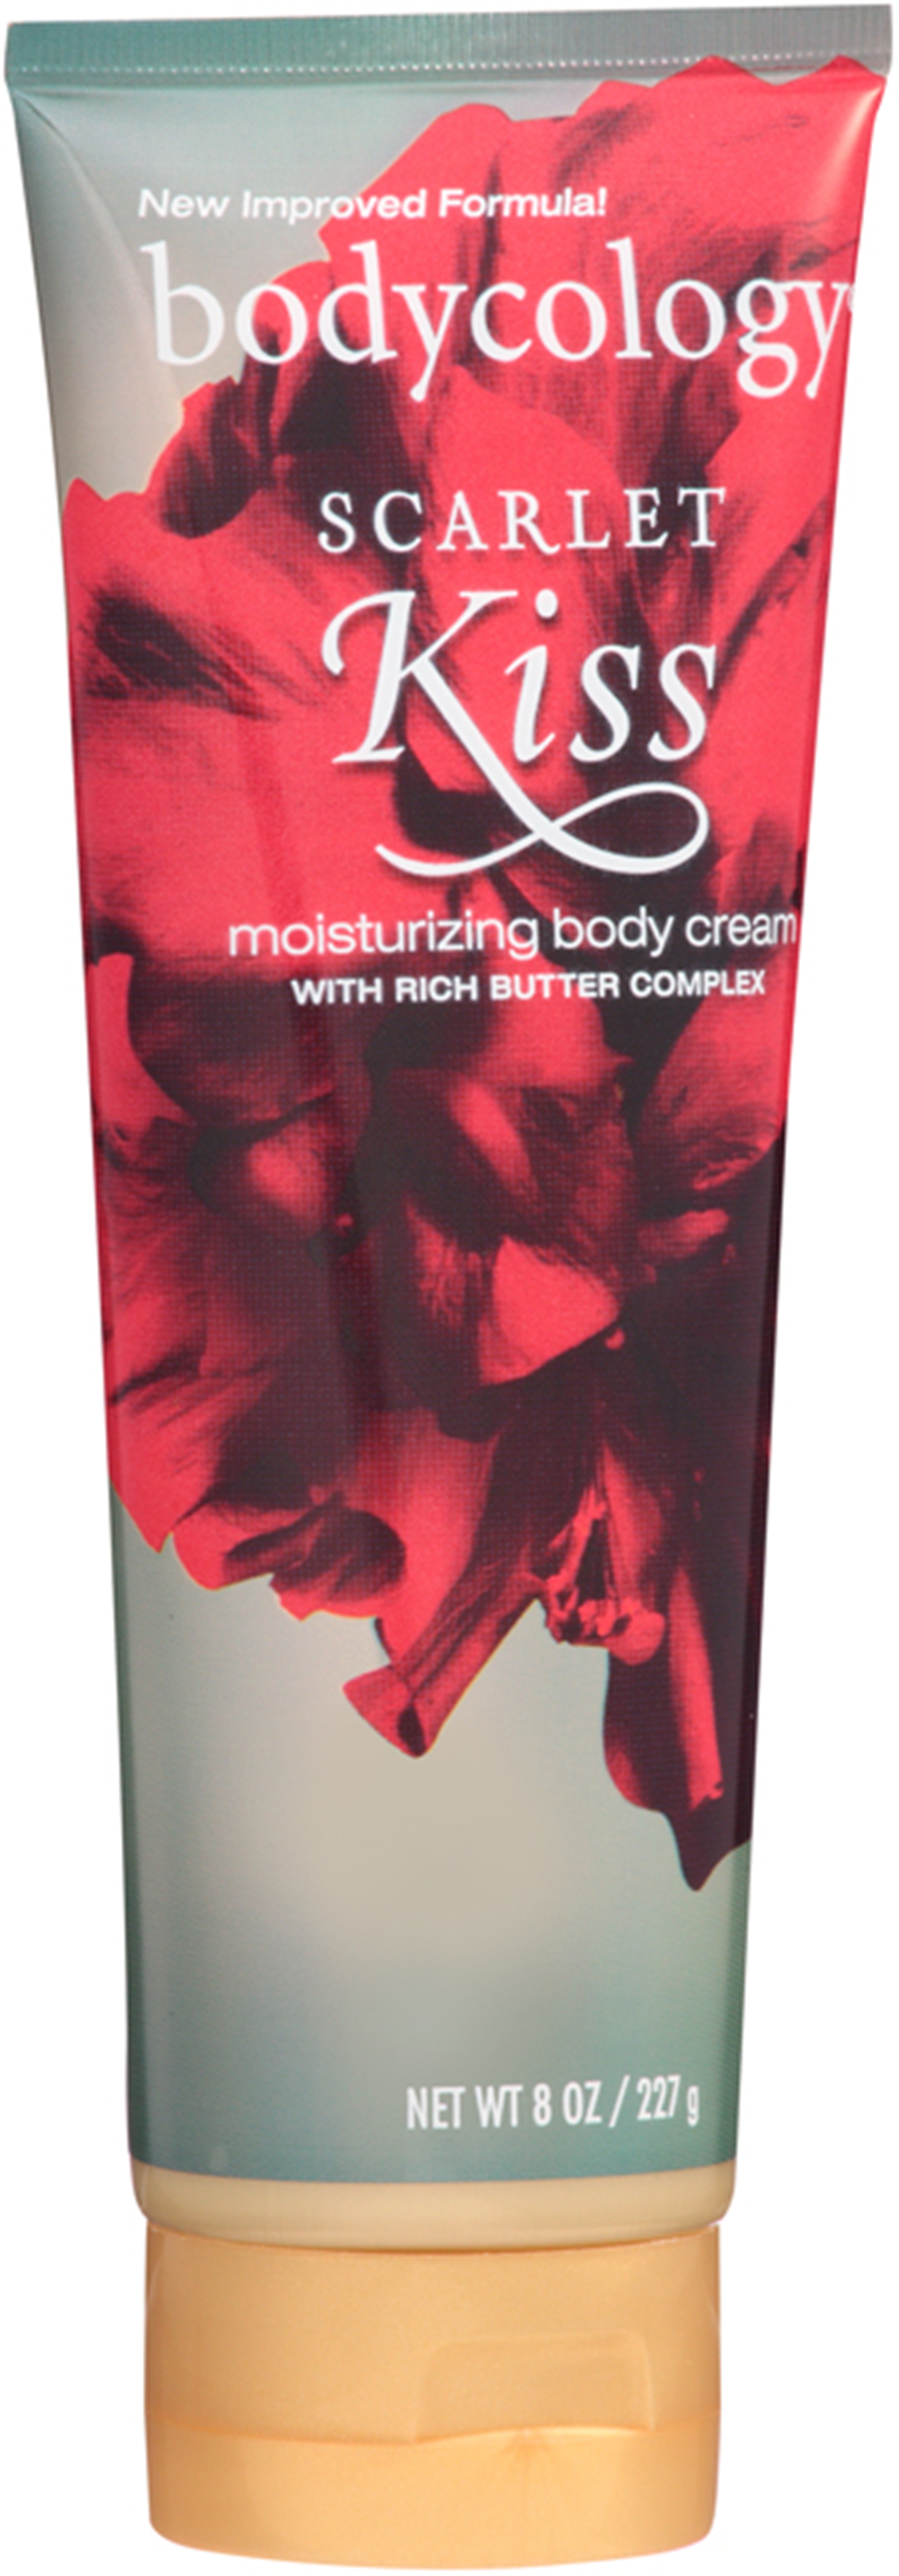 Recaro Bodycology Scarlet Kiss Moisturizing Body Cream, 8 oz